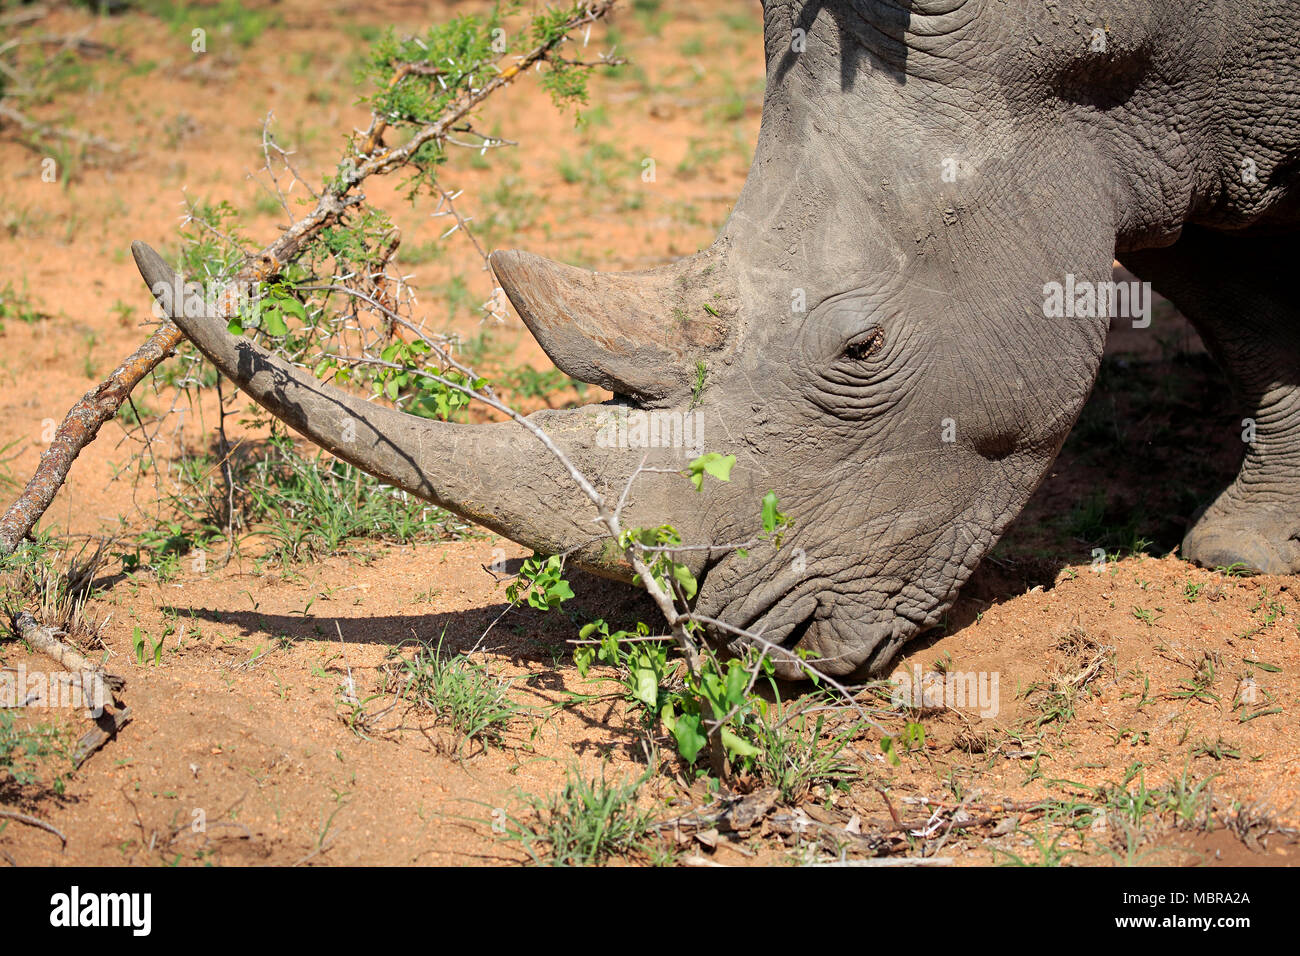 Rinoceronte bianco (Ceratotherium simum), Adulto, animale ritratto, mangiare, foraggio, pachiderma, Sabi Sand Game Reserve Foto Stock